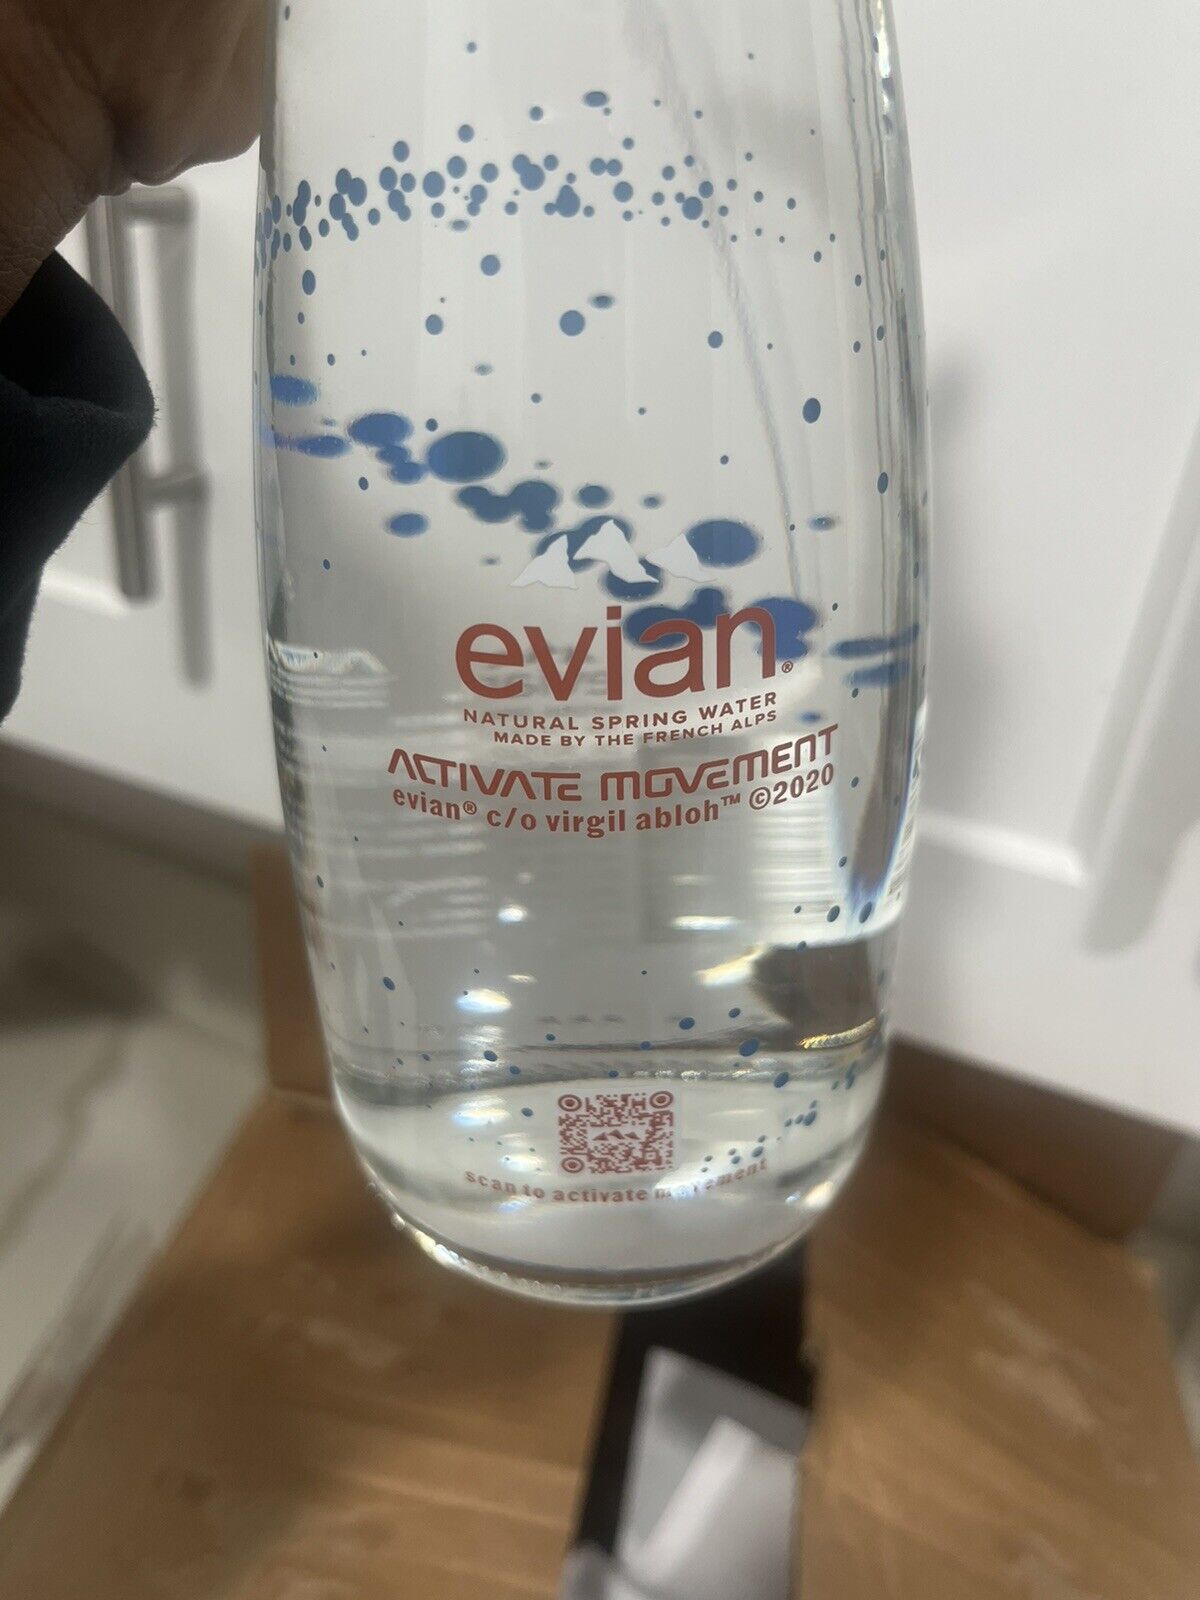 New, Evian + Virgil Abloh Glass Water Bottles from 2020